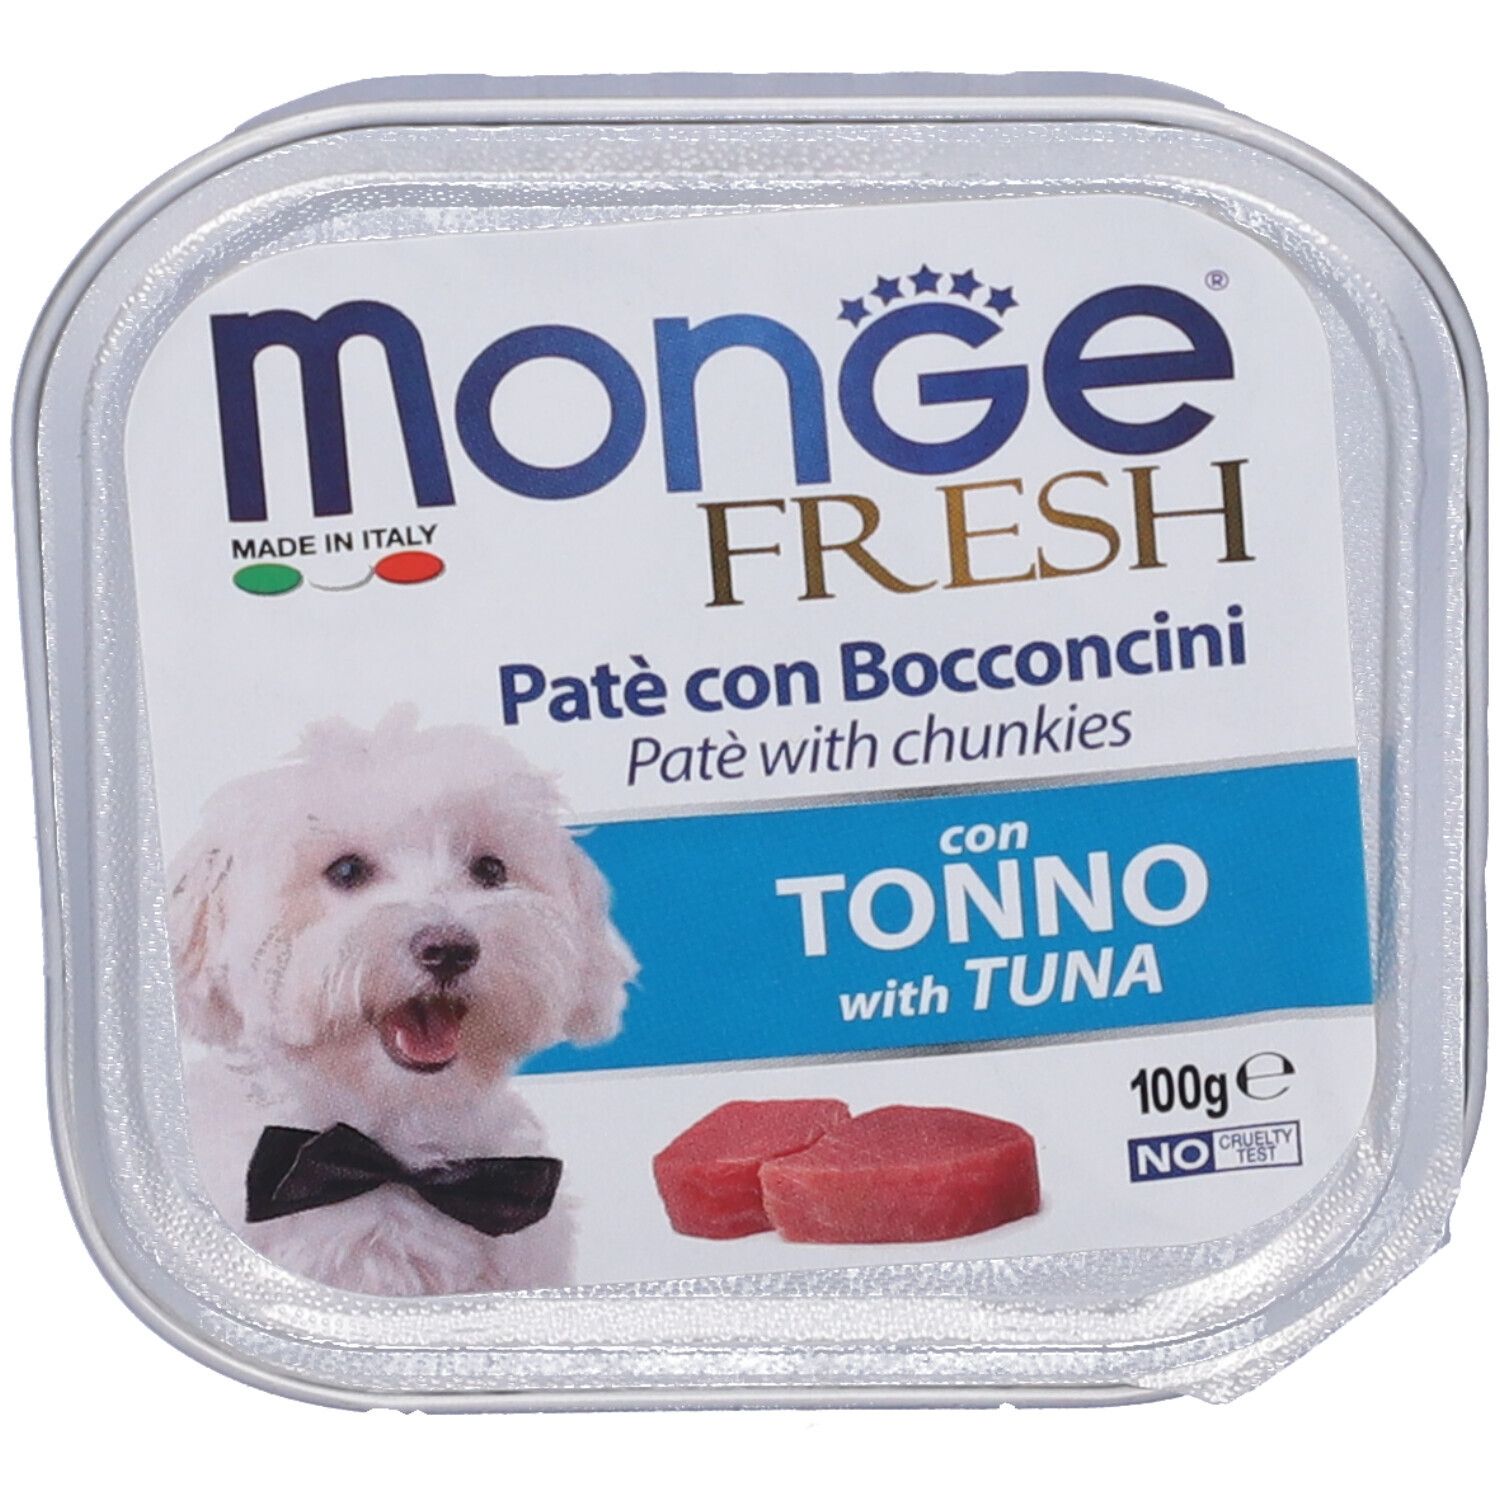 Image of Monge Fresh Tonno Paté Con Bocconcini